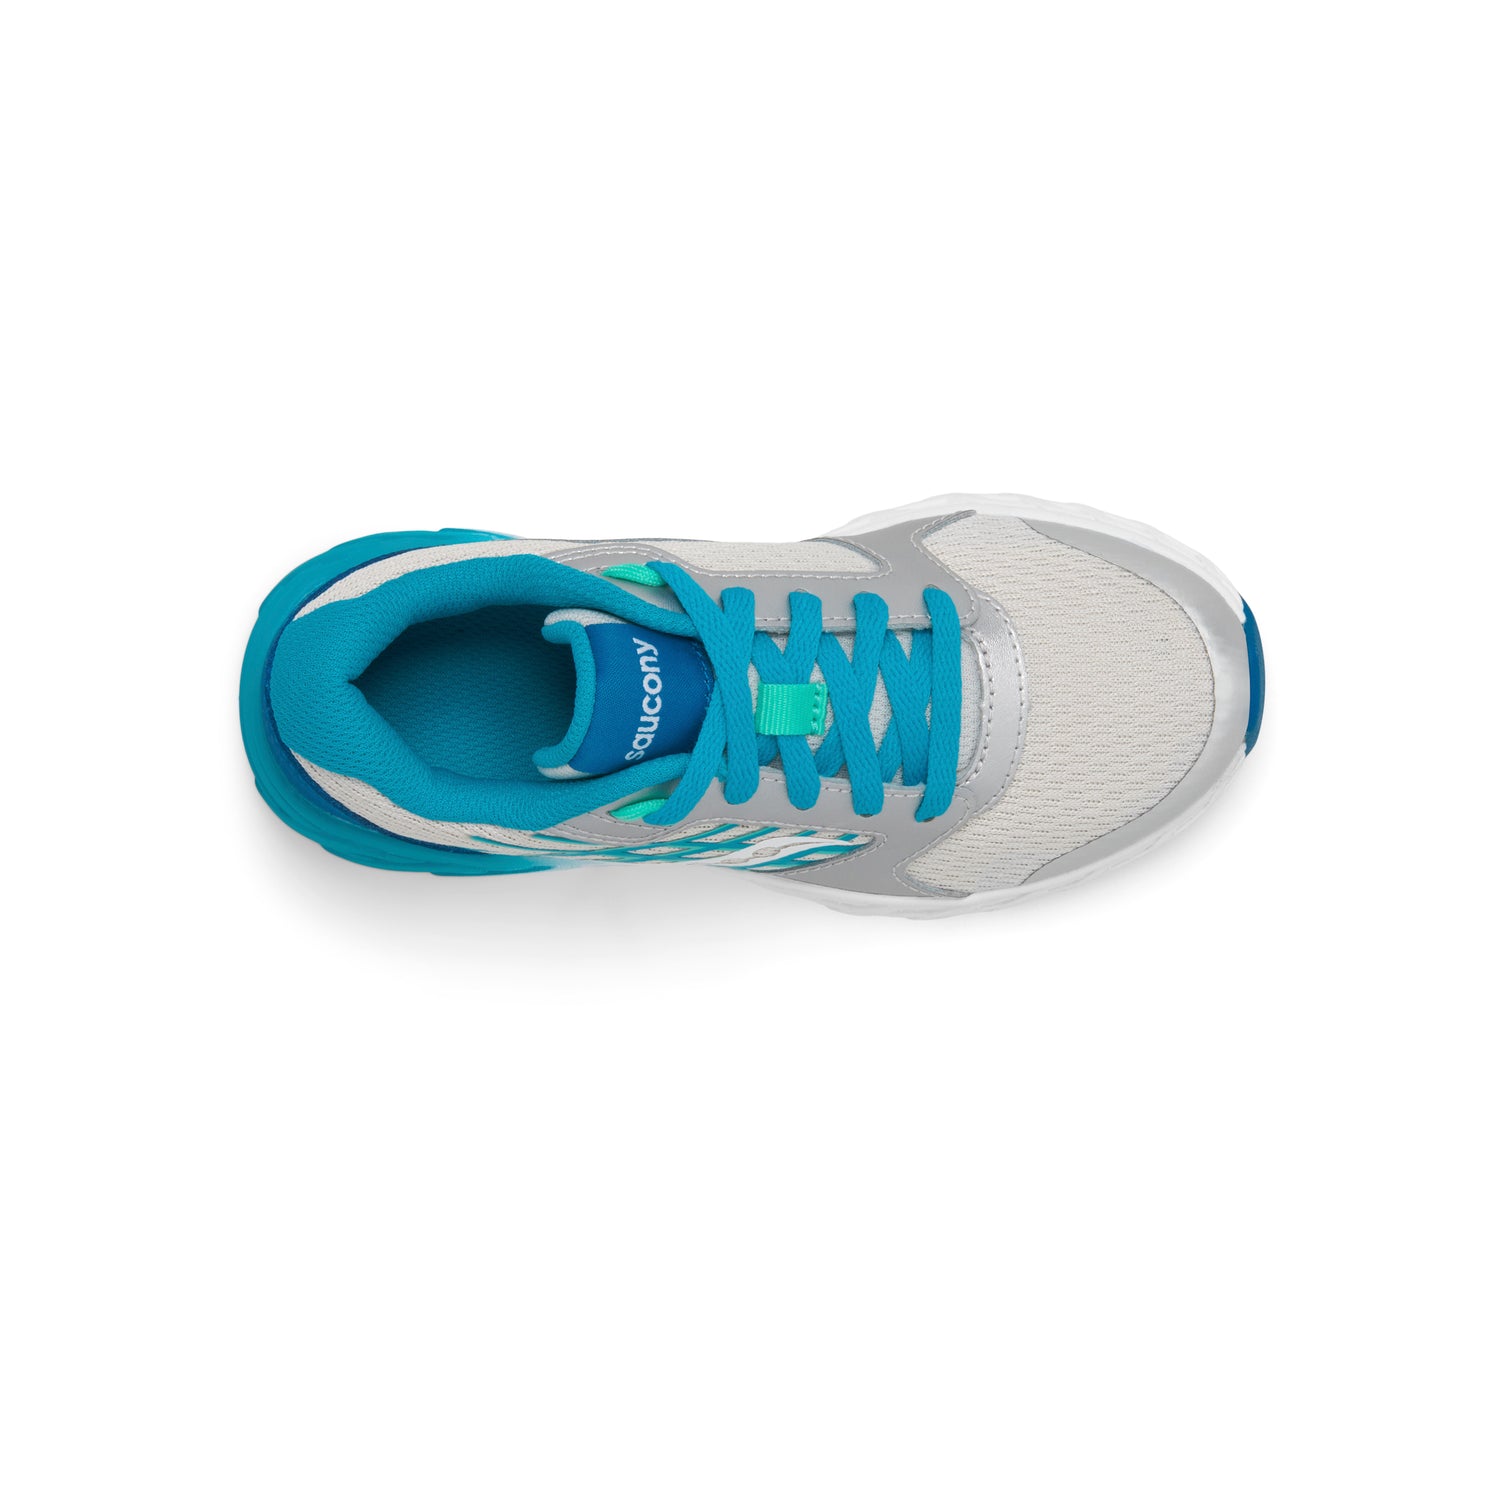 Wind 2.0 Sneaker Turquoise/Silver